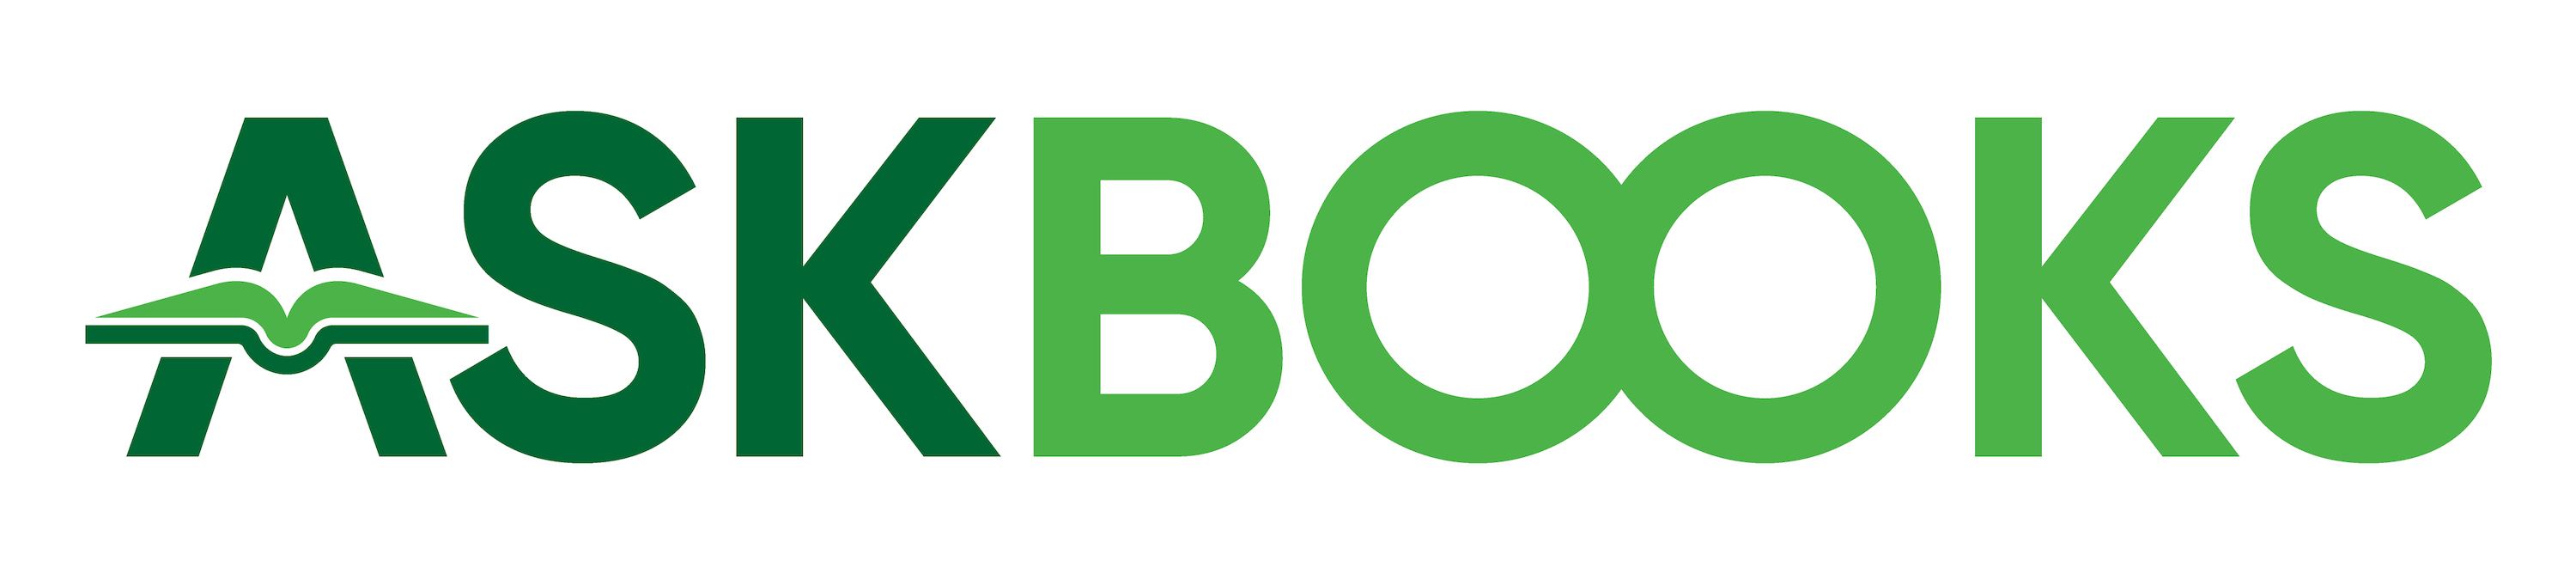 askbooks Logo